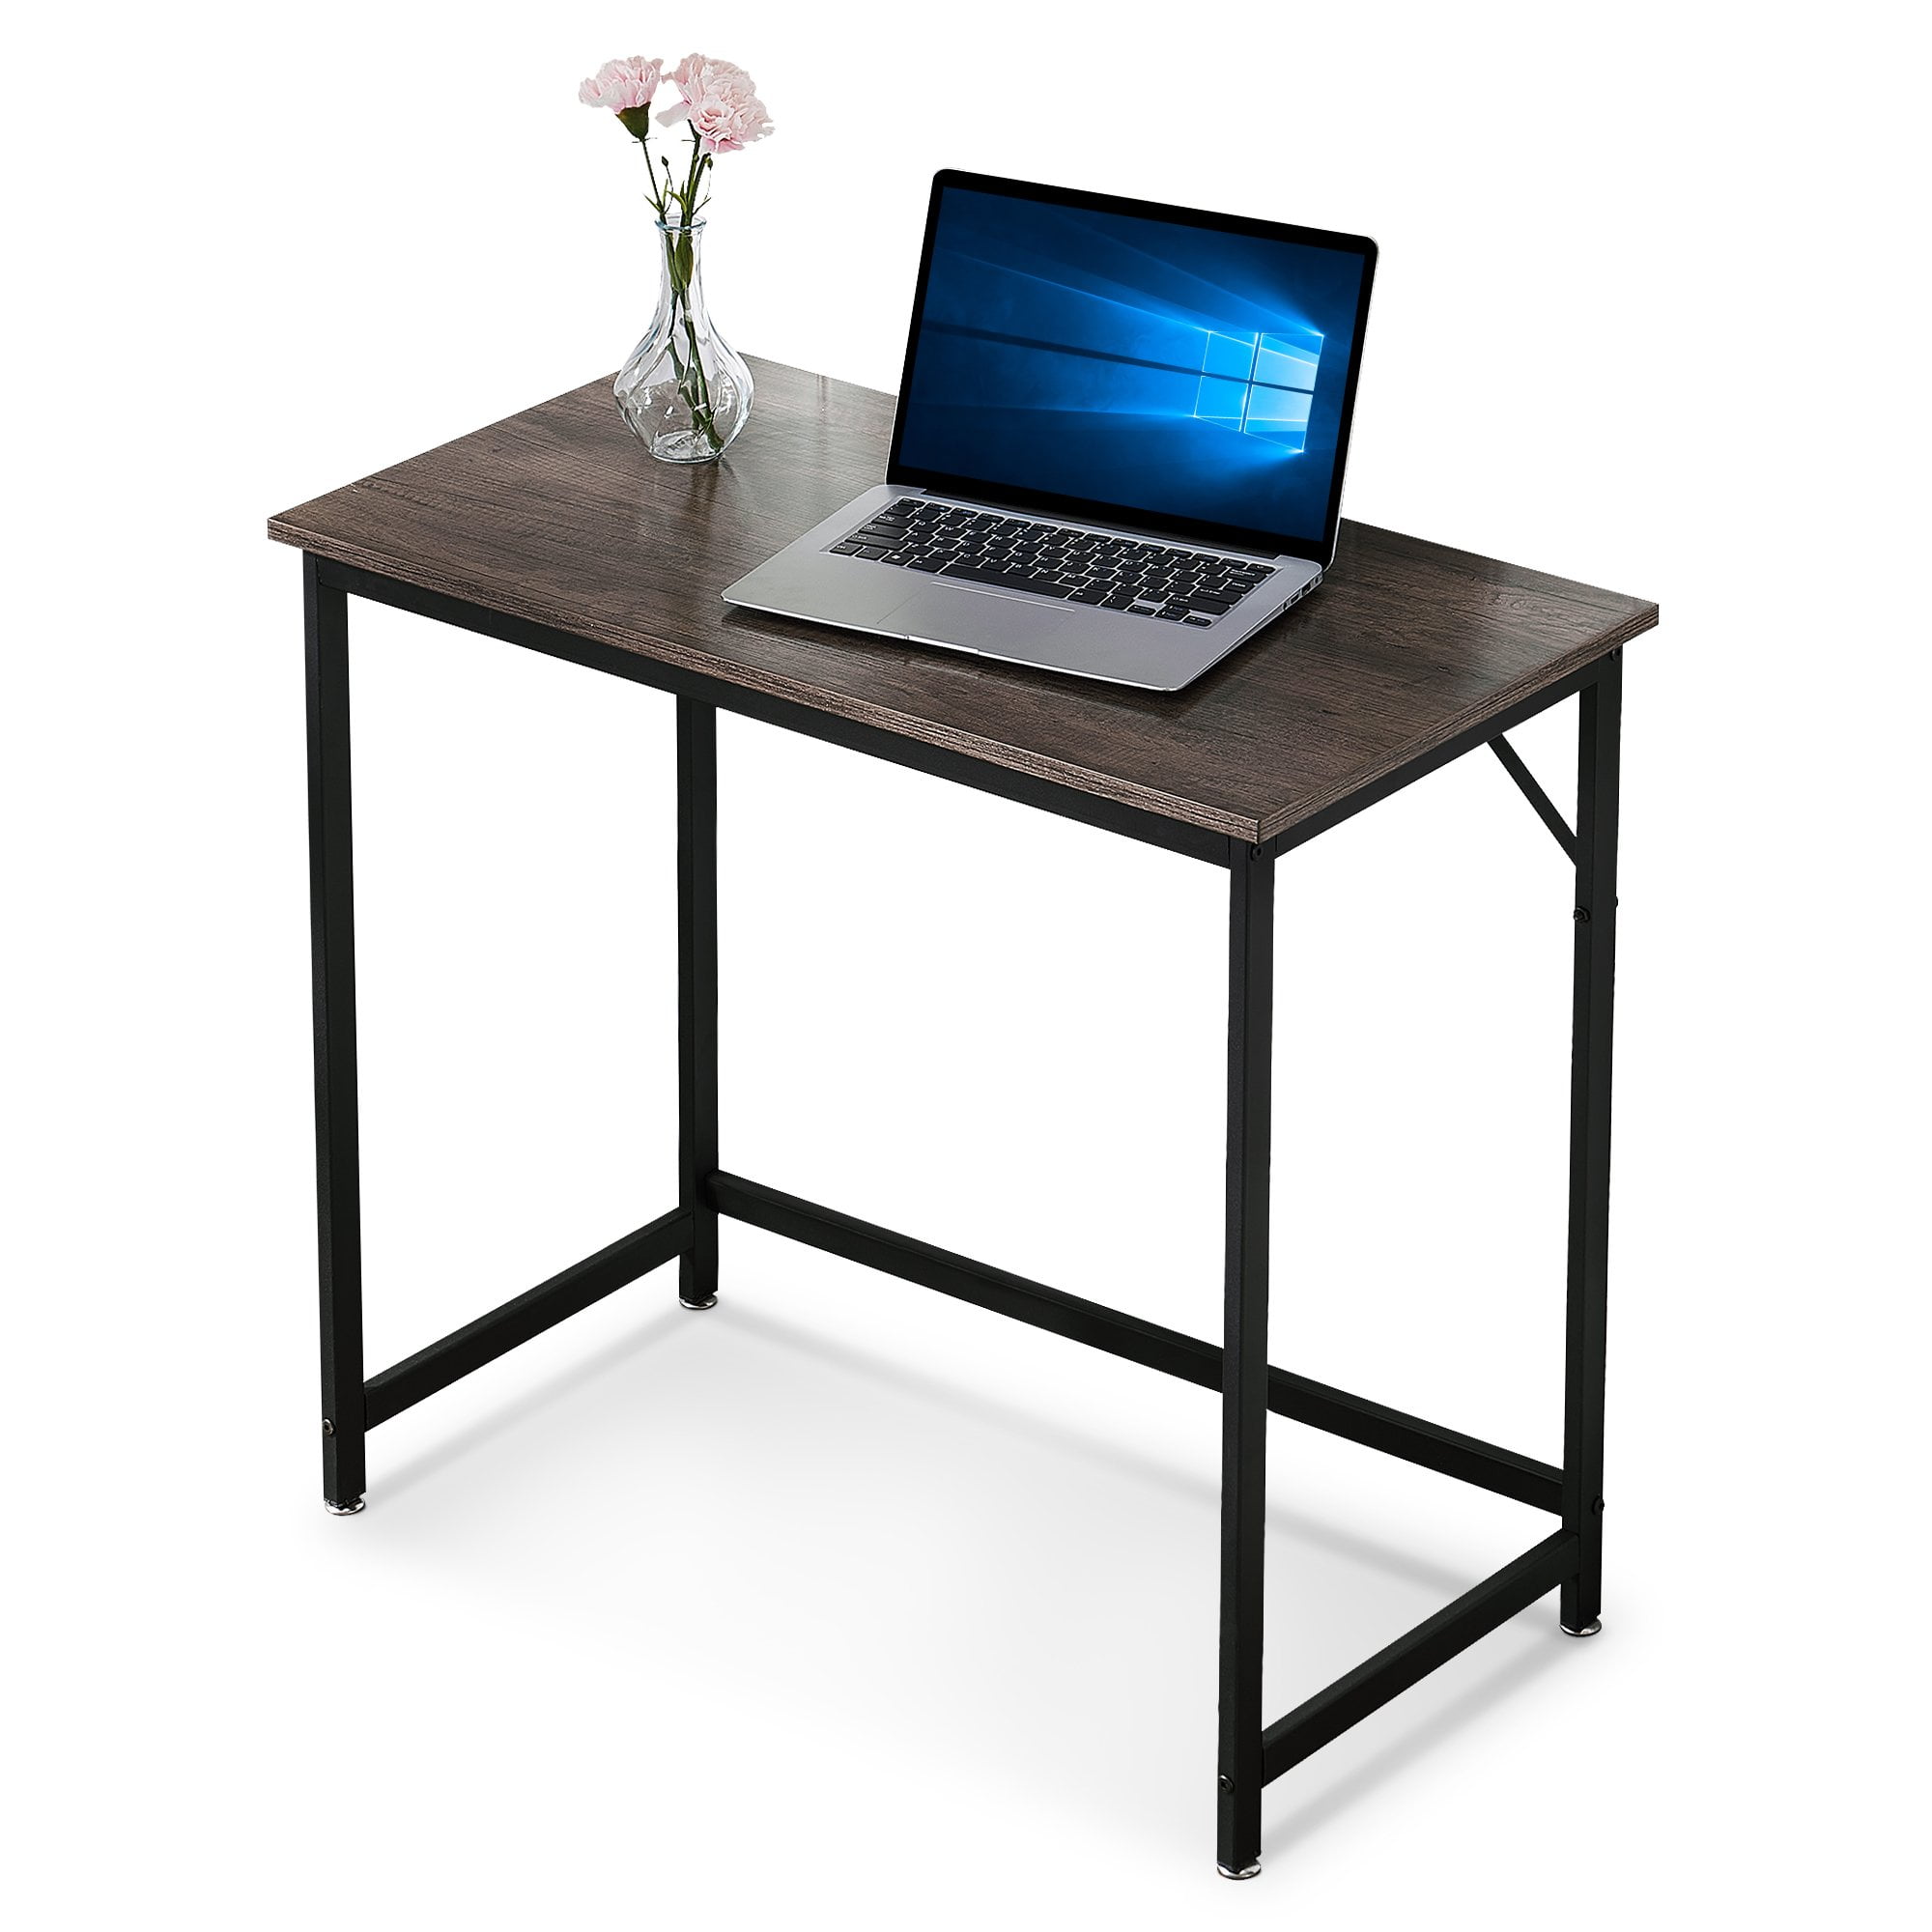 Computer Desk Table Workstation Home Office Student Dorm Laptop StudyBlack/white 